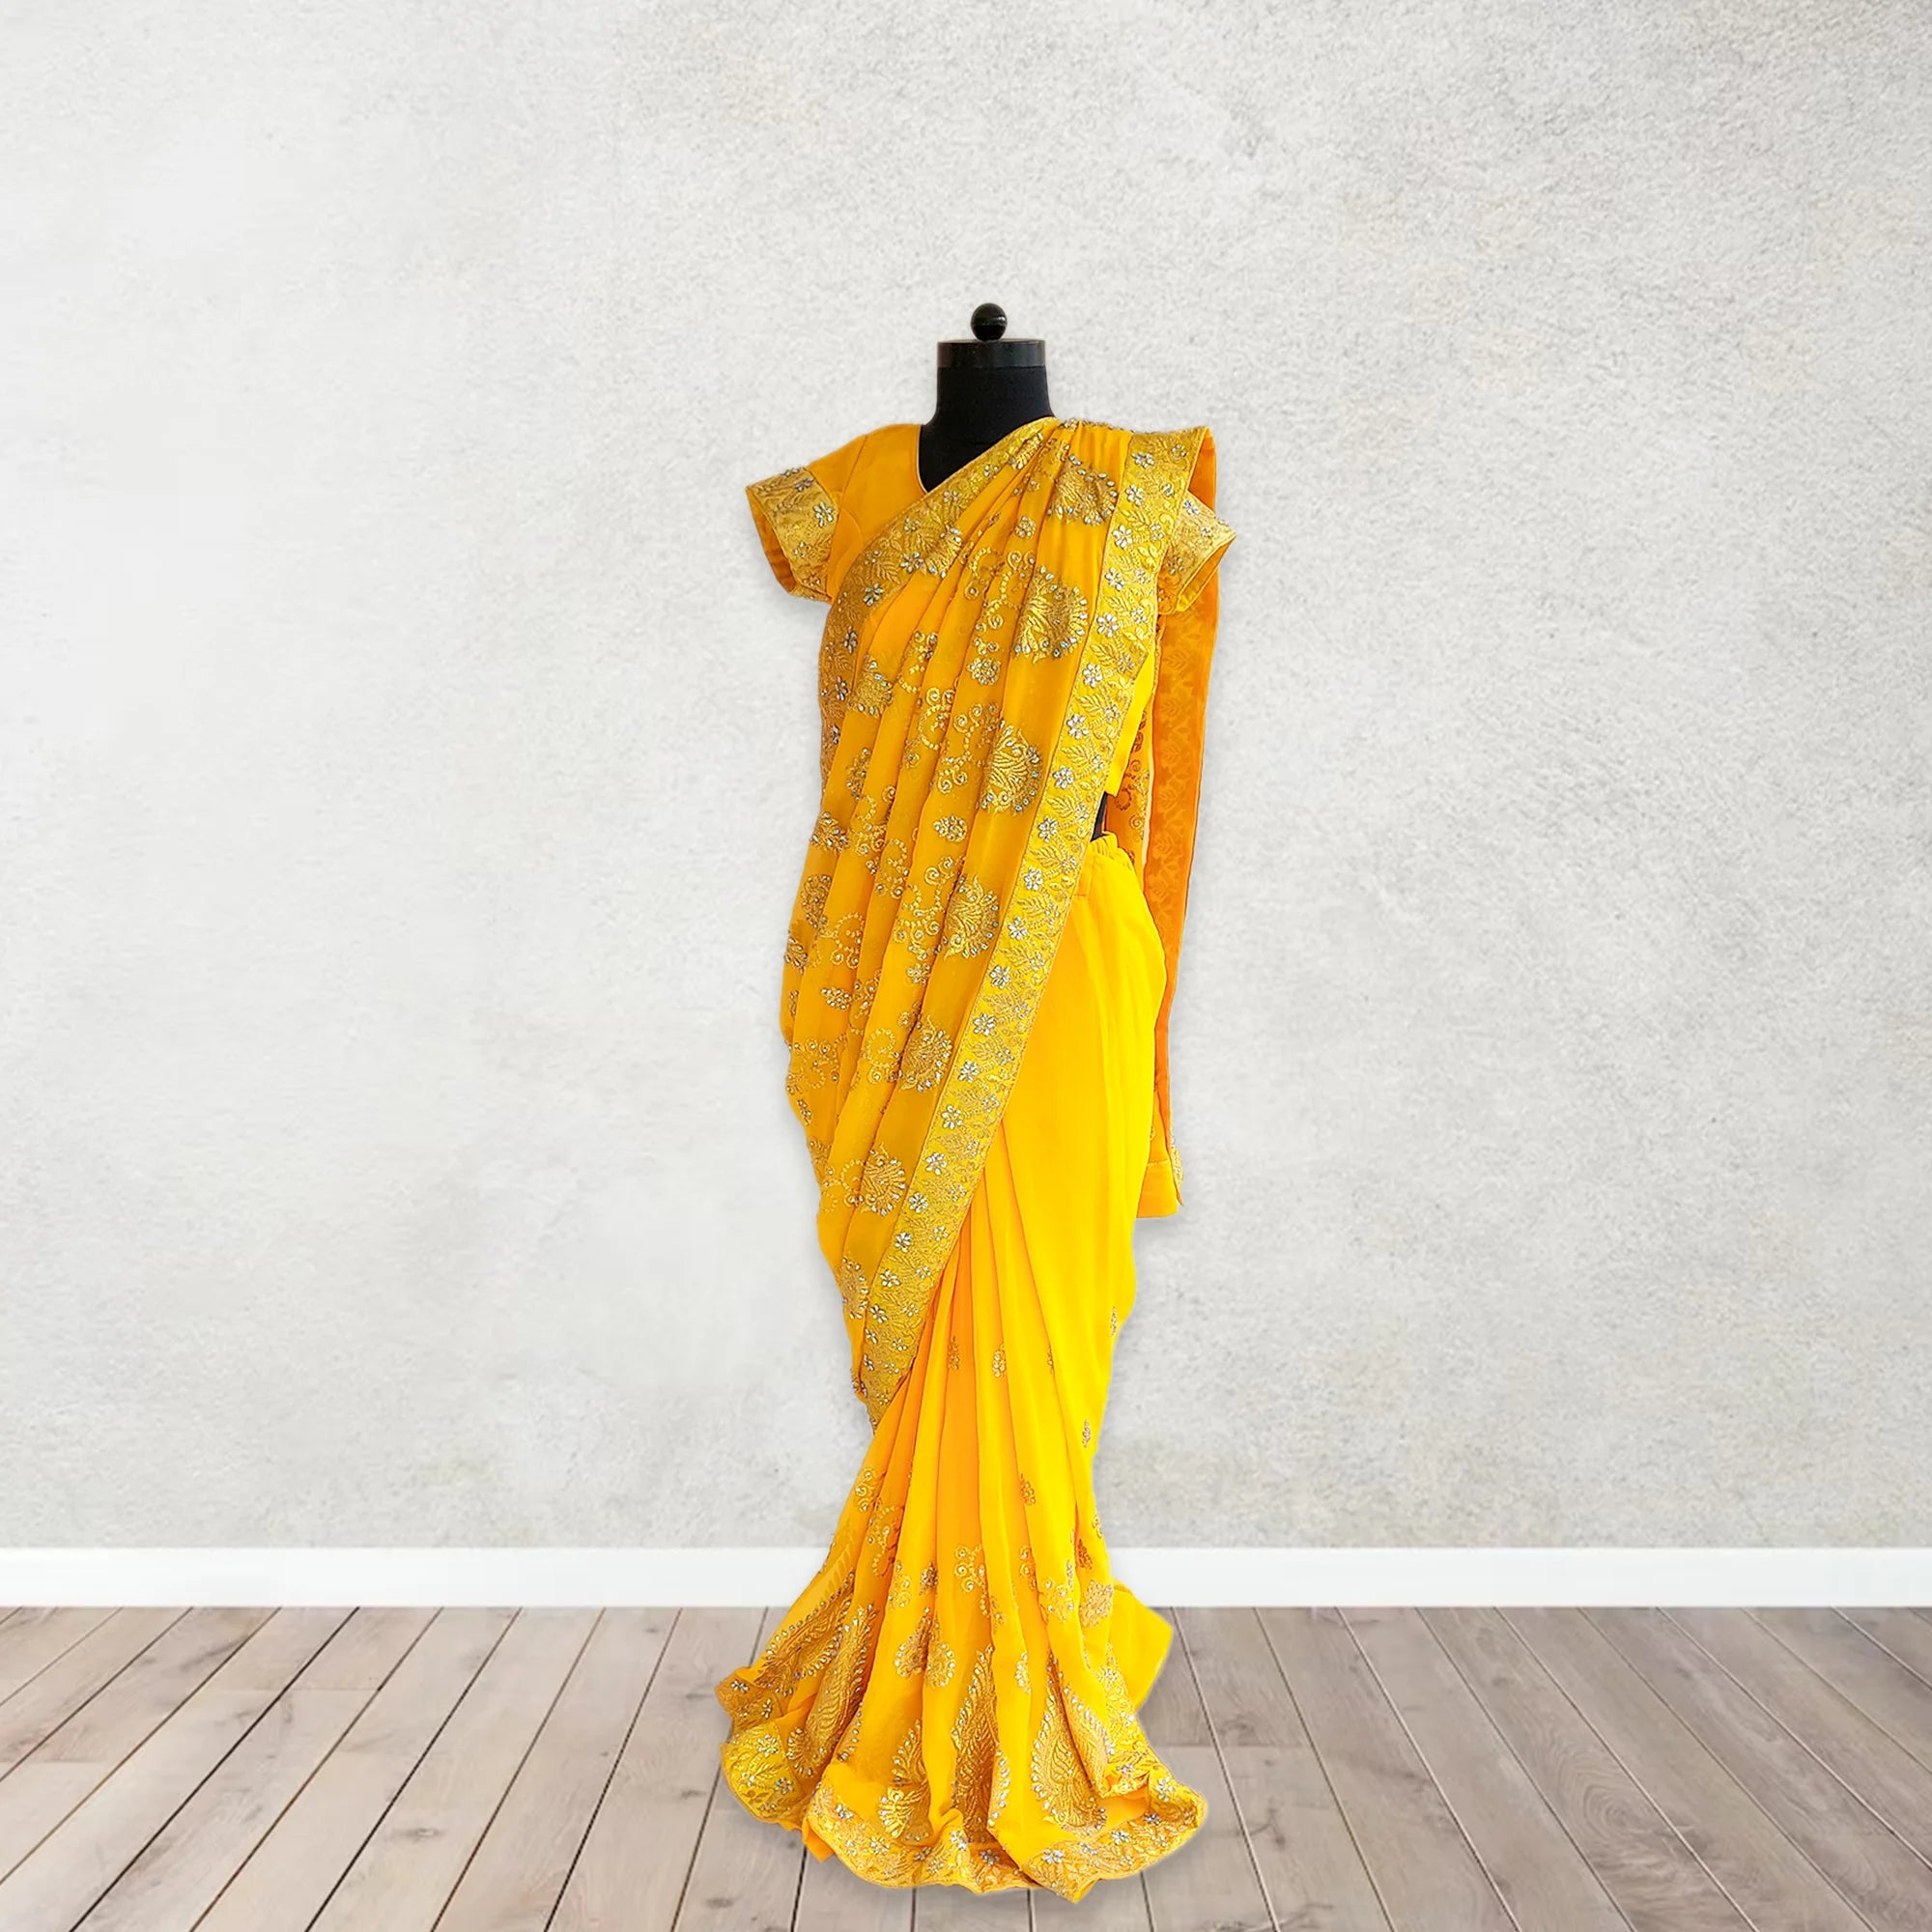 Embroidered Chiffon Sarees, One Minute Saree, Ready to Wear Saree, Indian Weddings saree, Indian Jewelry Mall